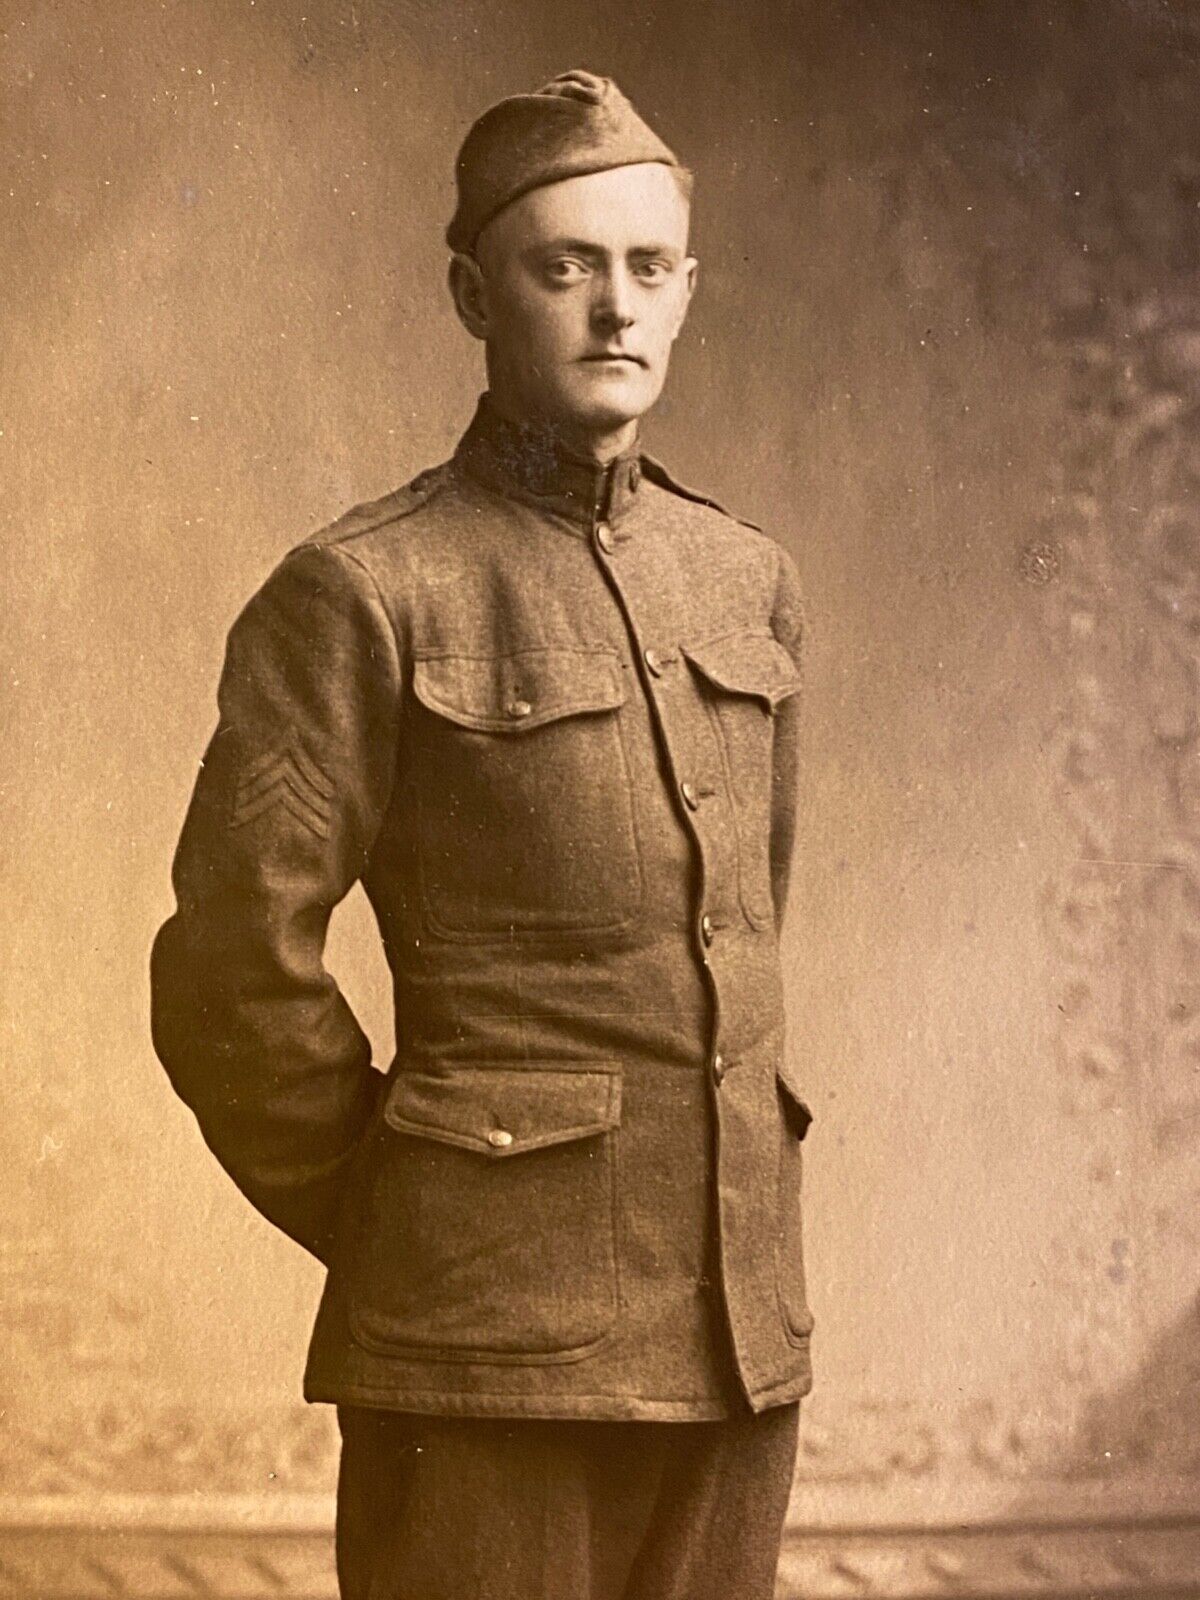 1918 WWI RPPC: U.S. SOLDIER IN UNIFORM antique real photo postcard VERSION NO. 1